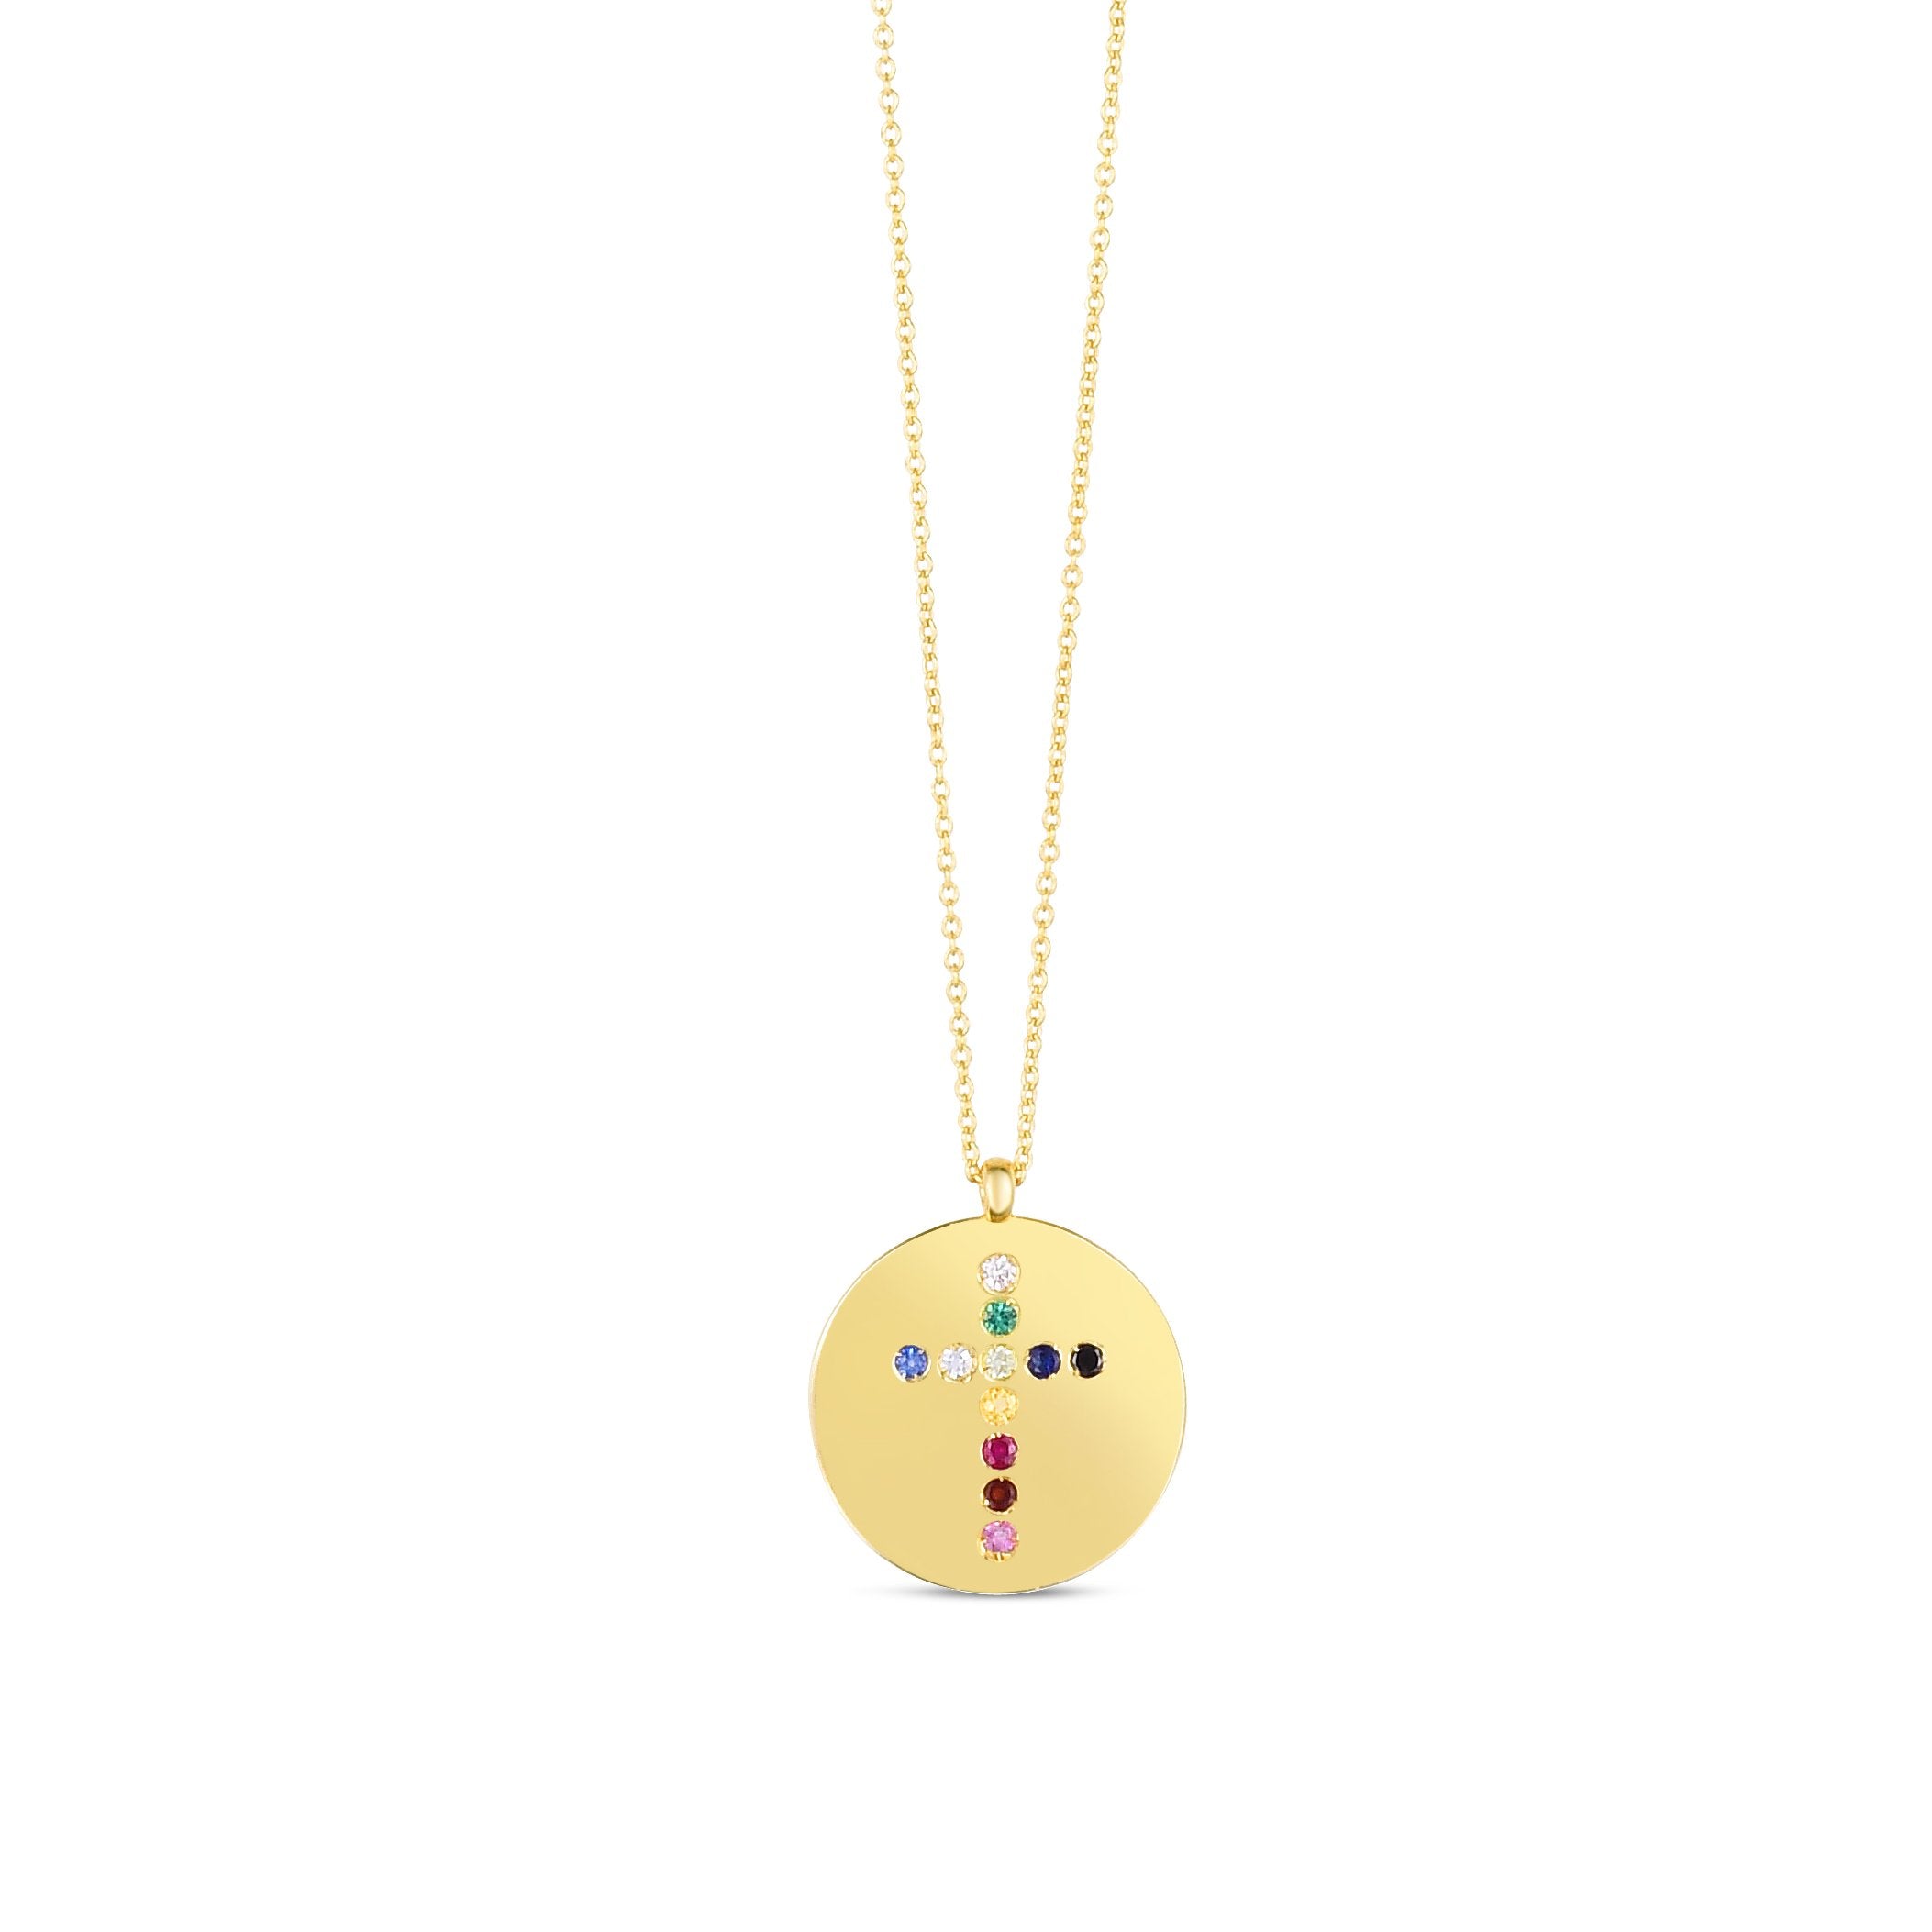 14K Yellow Gold Diamond & Gemstone Disc Pendant Necklace